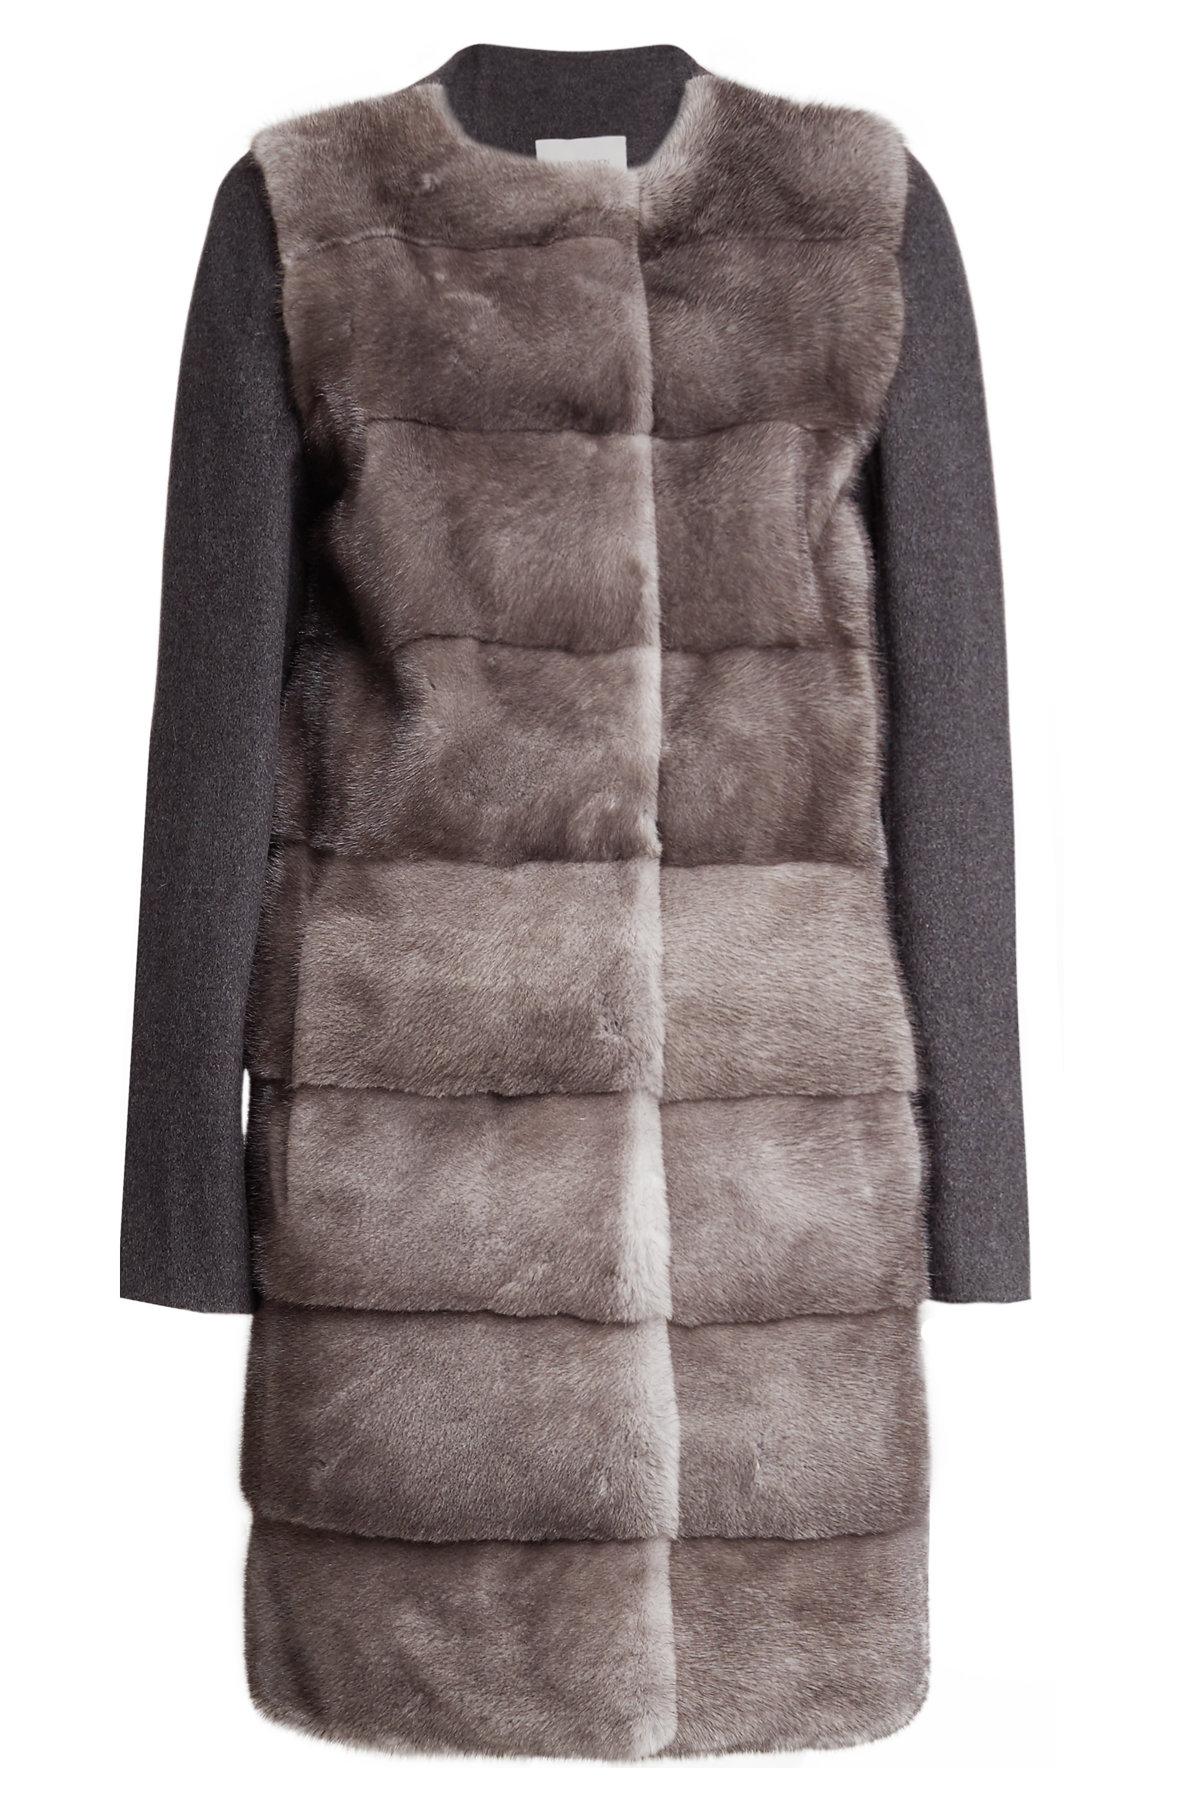 Yves Salomon Fur Coat Top Sellers, 57% OFF | www.colegiogamarra.com